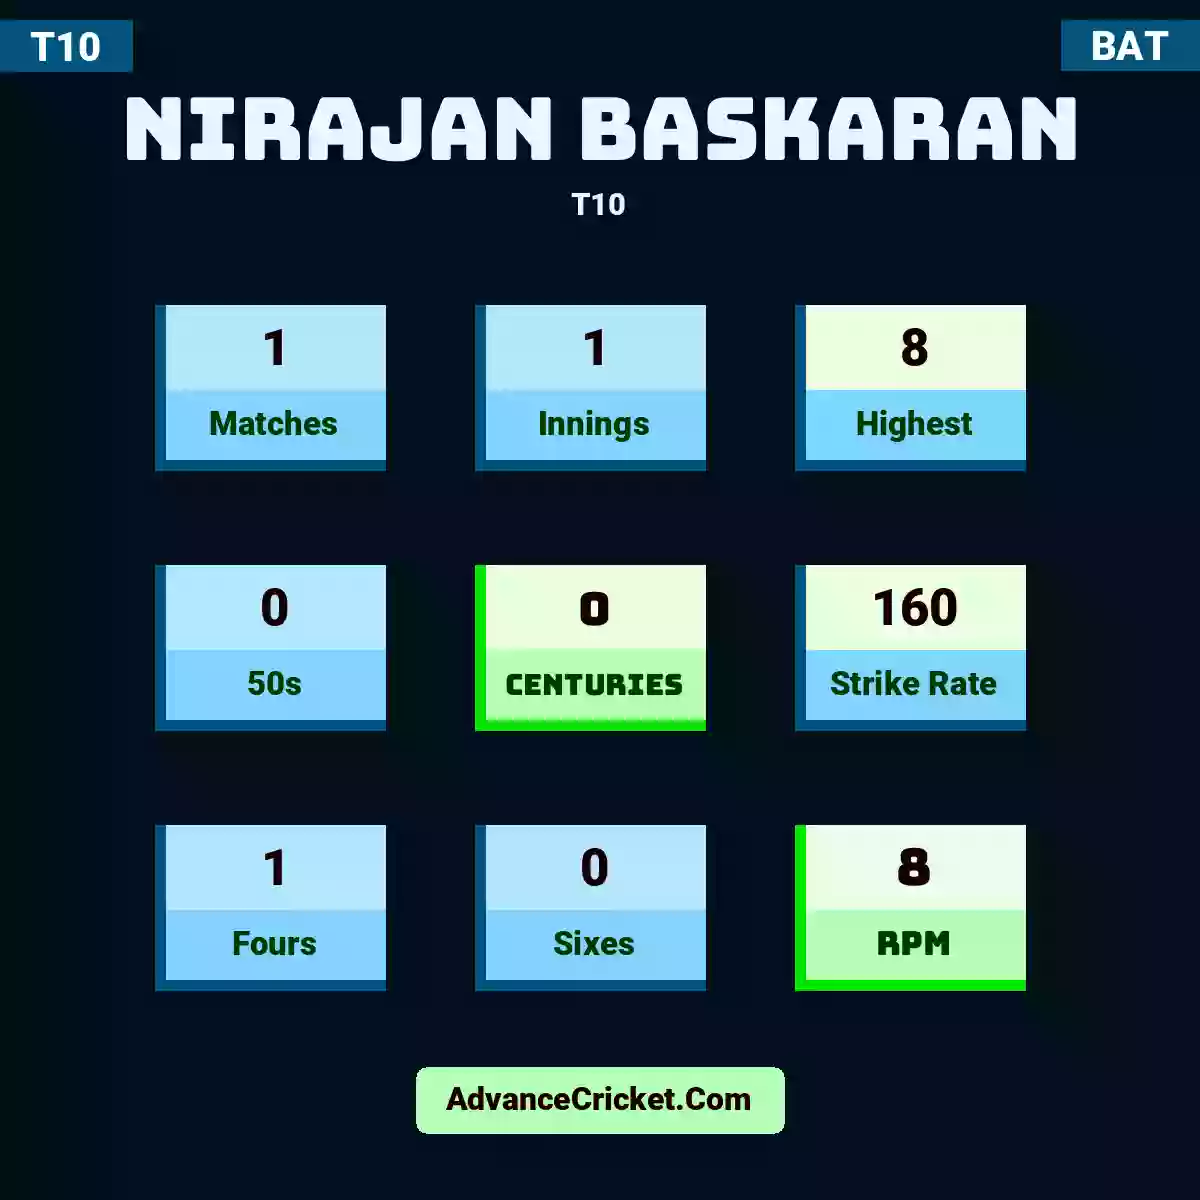 Nirajan Baskaran T10 , Nirajan Baskaran played 1 matches, scored 8 runs as highest, 0 half-centuries, and 0 centuries, with a strike rate of 160. N.Baskaran hit 1 fours and 0 sixes, with an RPM of 8.